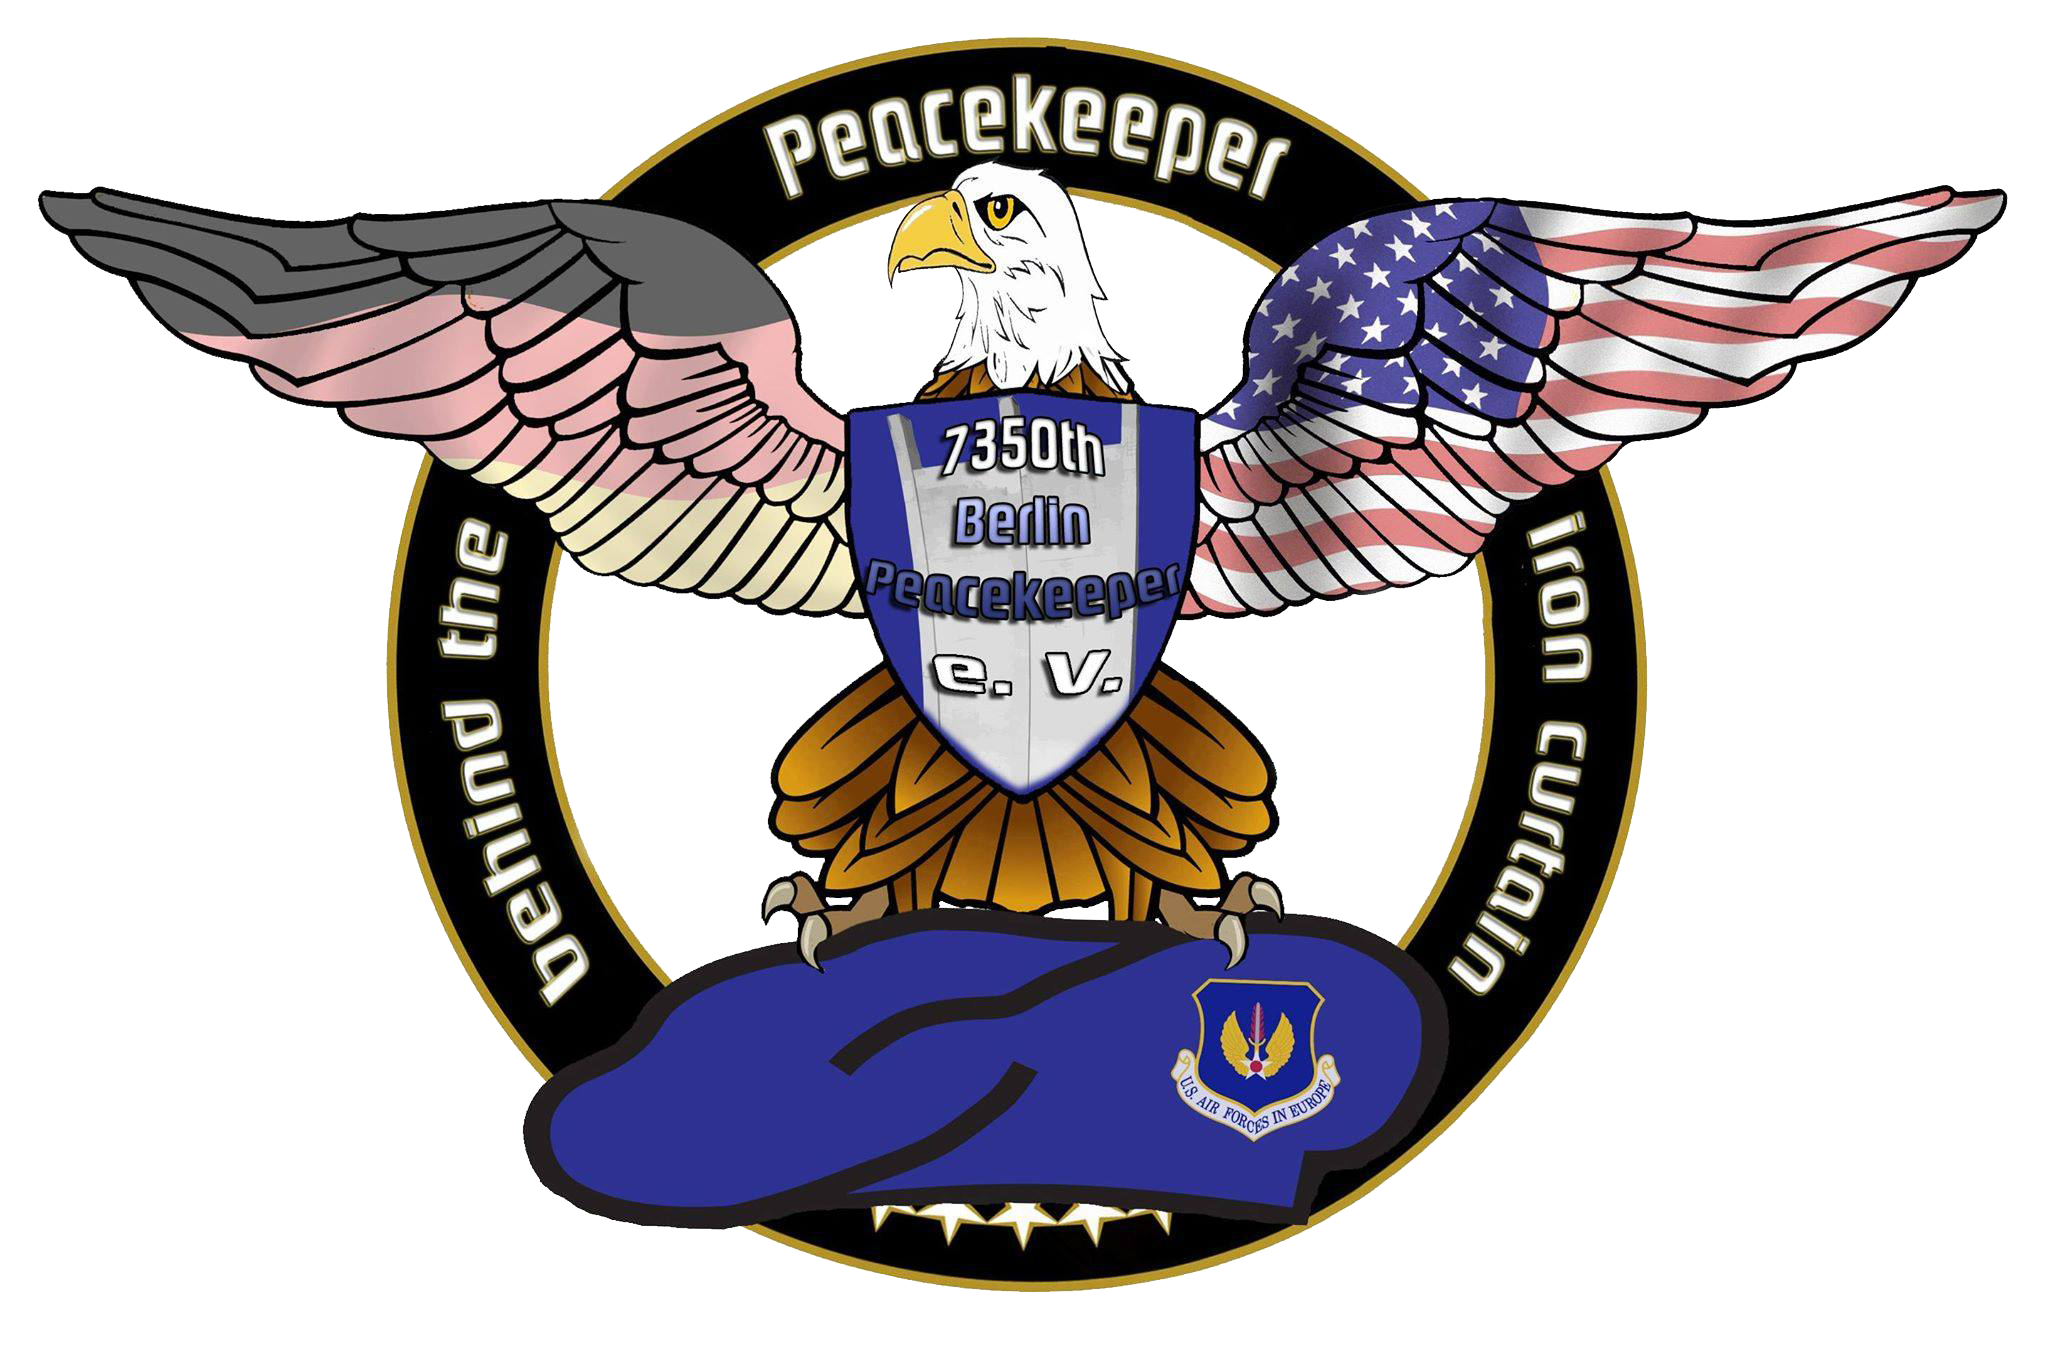 7350th Berlin Peacekeeper e.V.